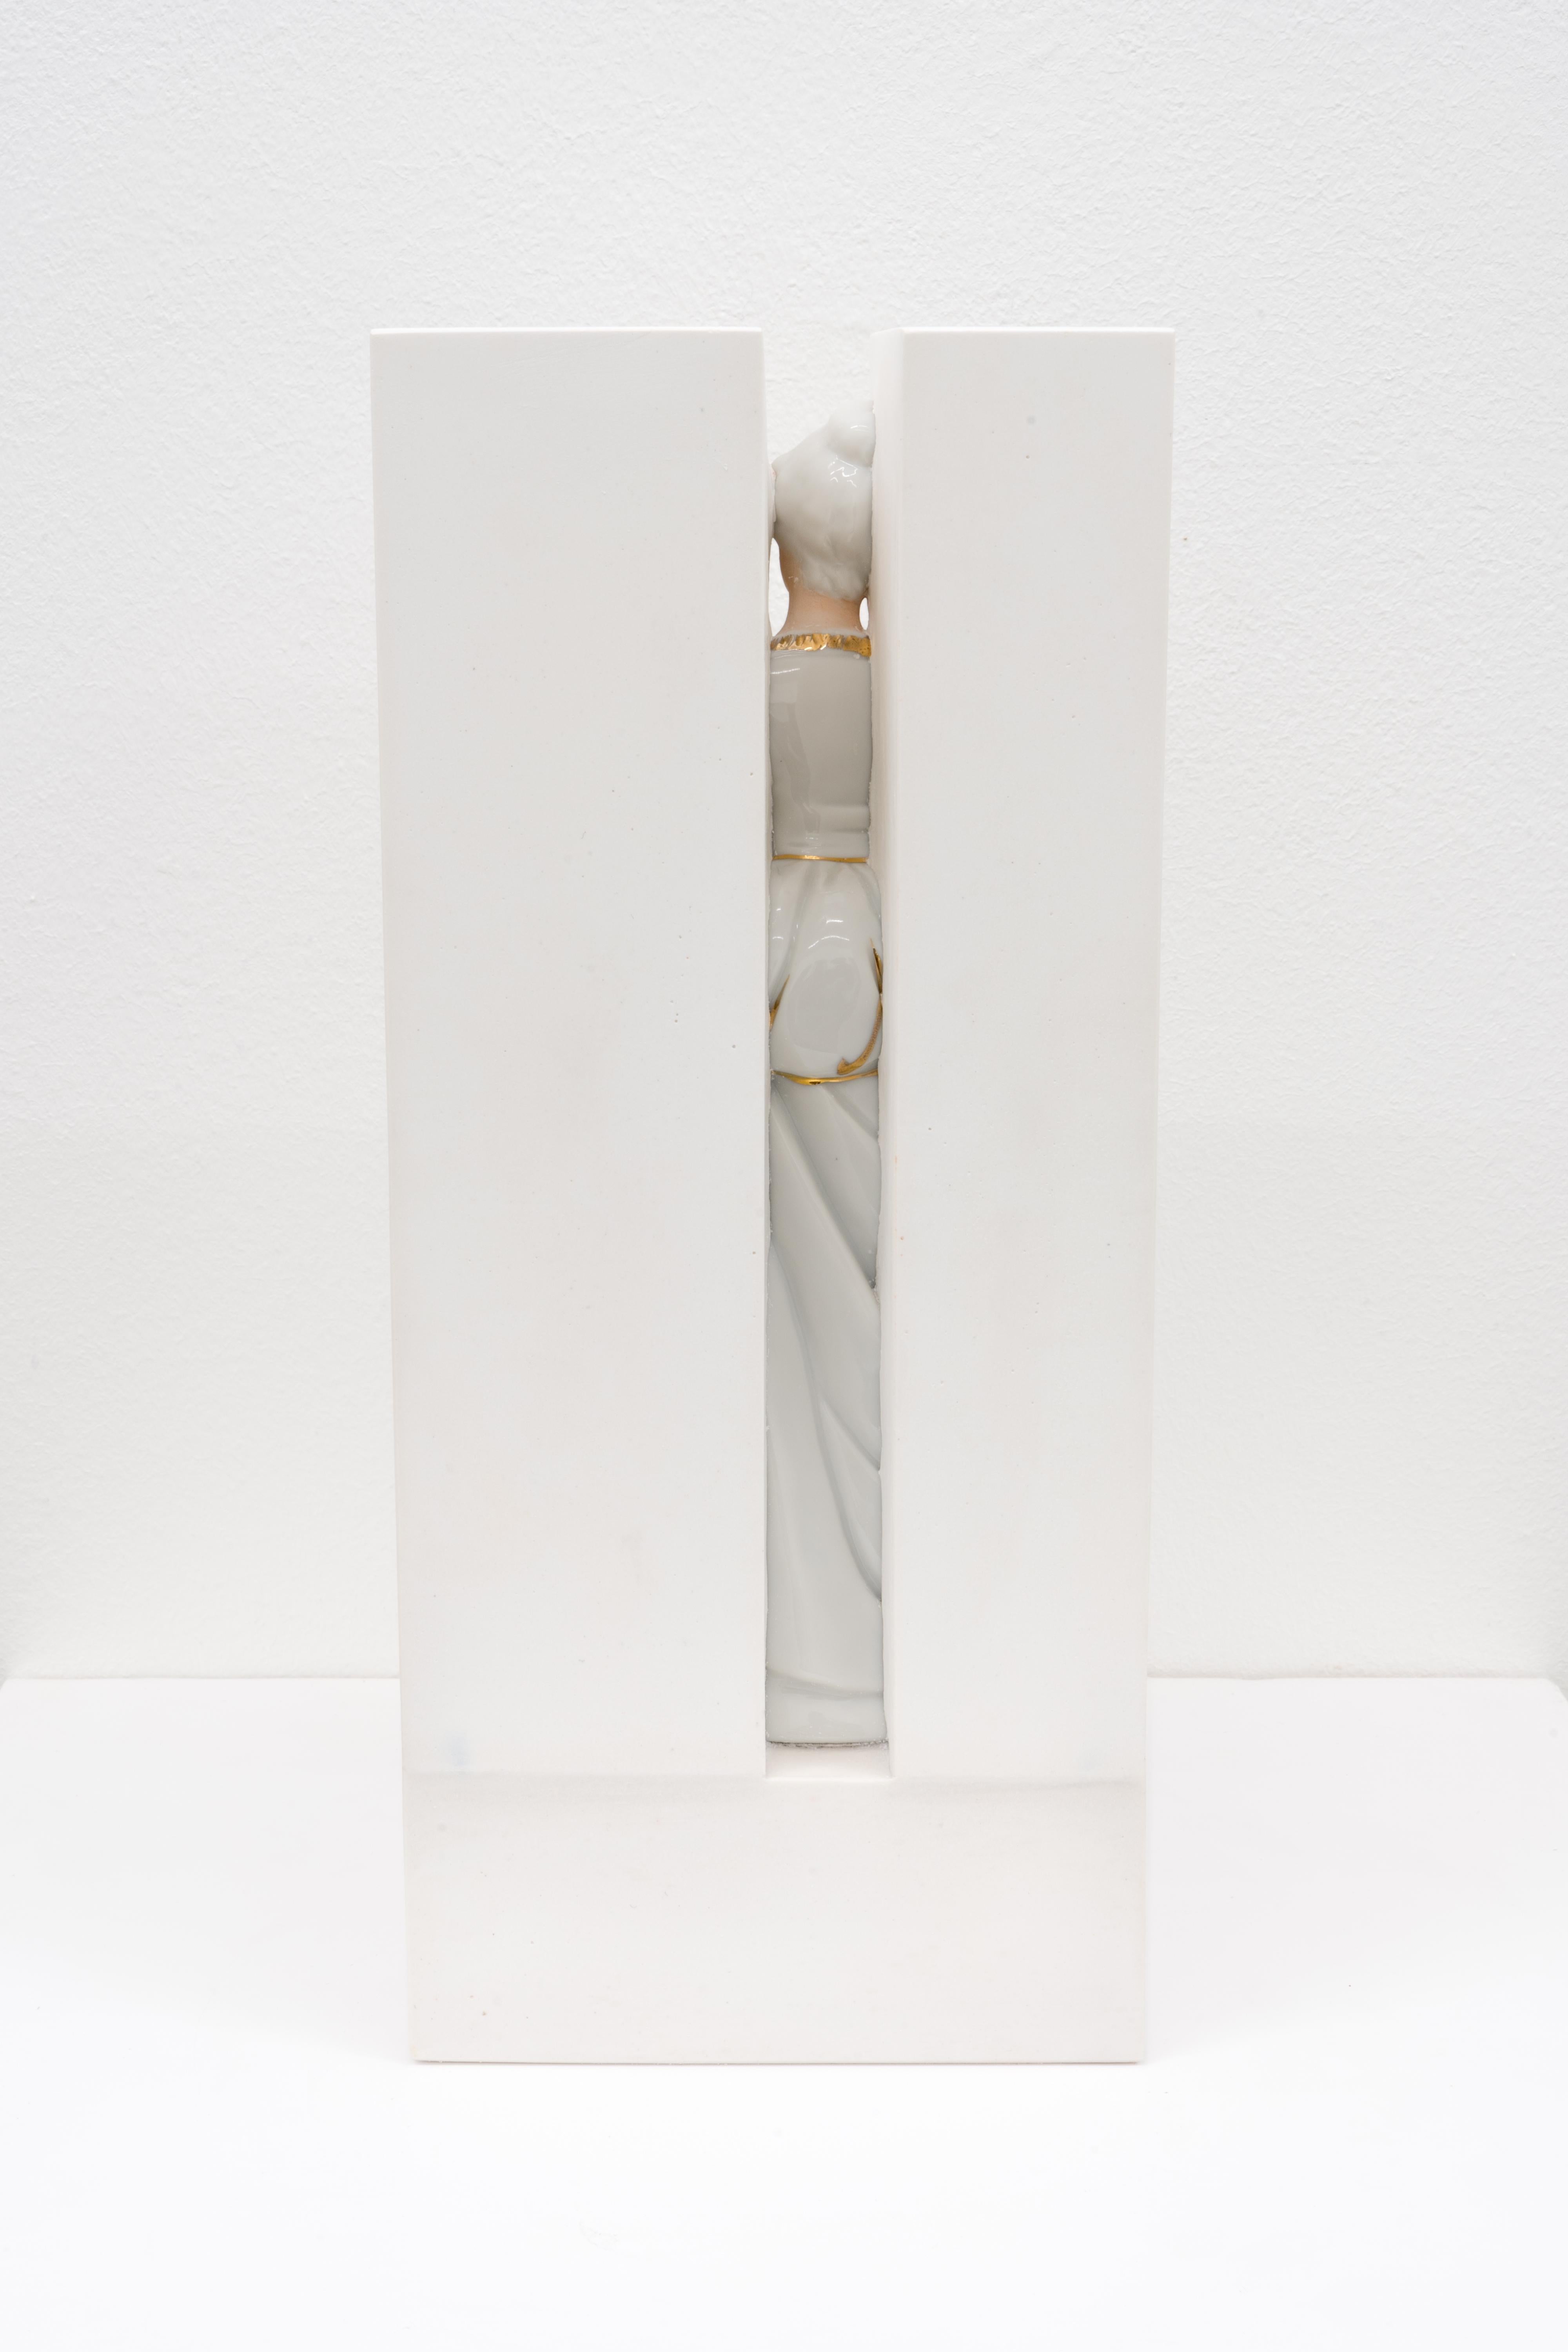 Broken flower No 5 - Contemporary Sculpture by Dana Widawski